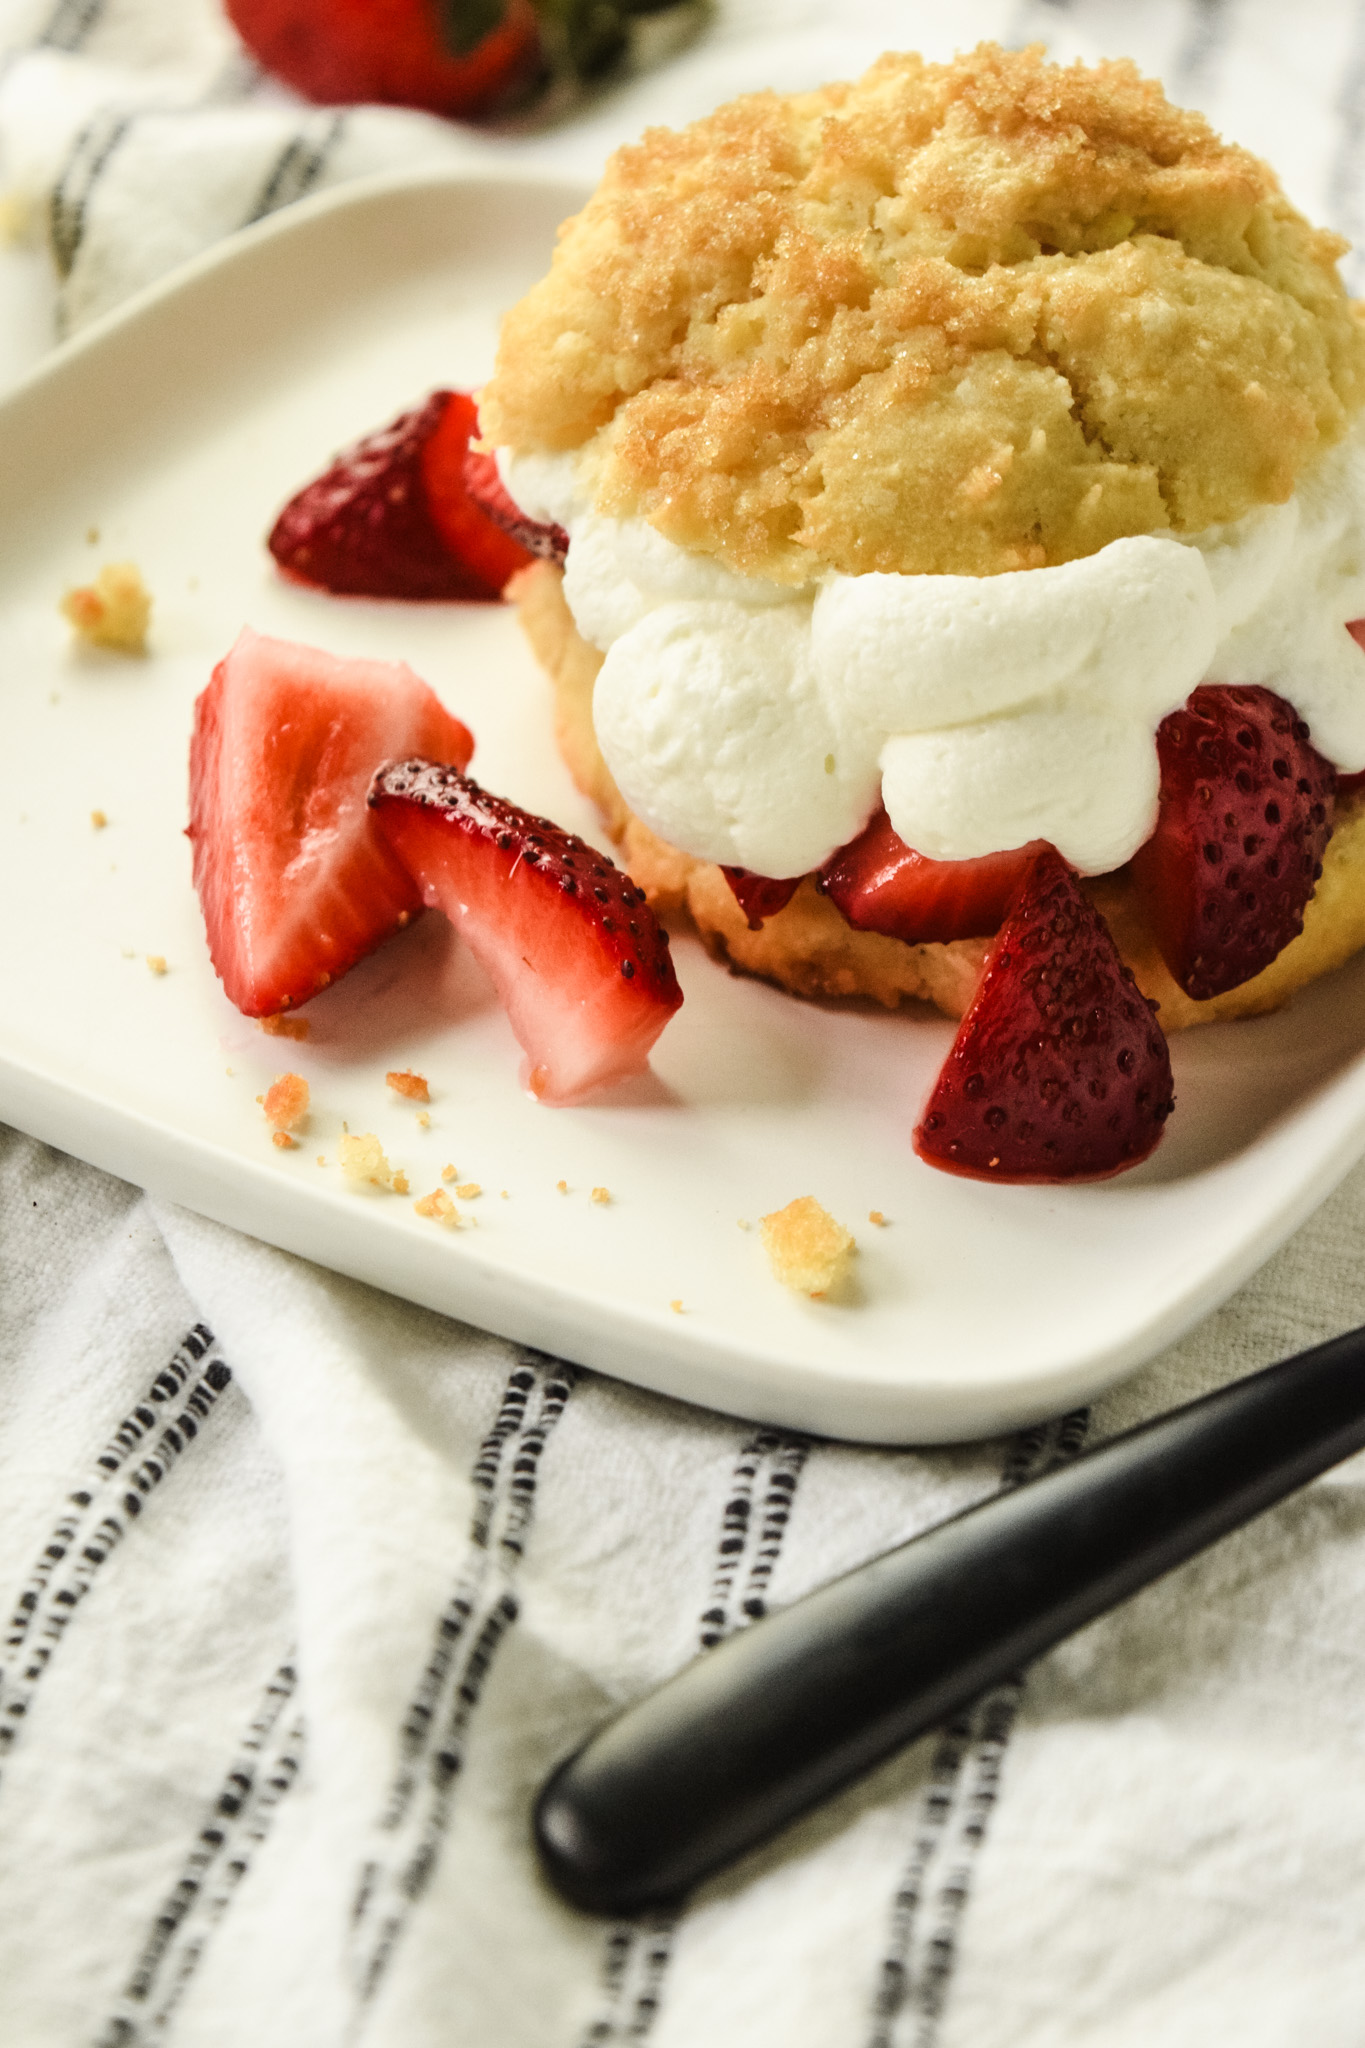 Strawberry Shortcake with Gluten Free Biscuits